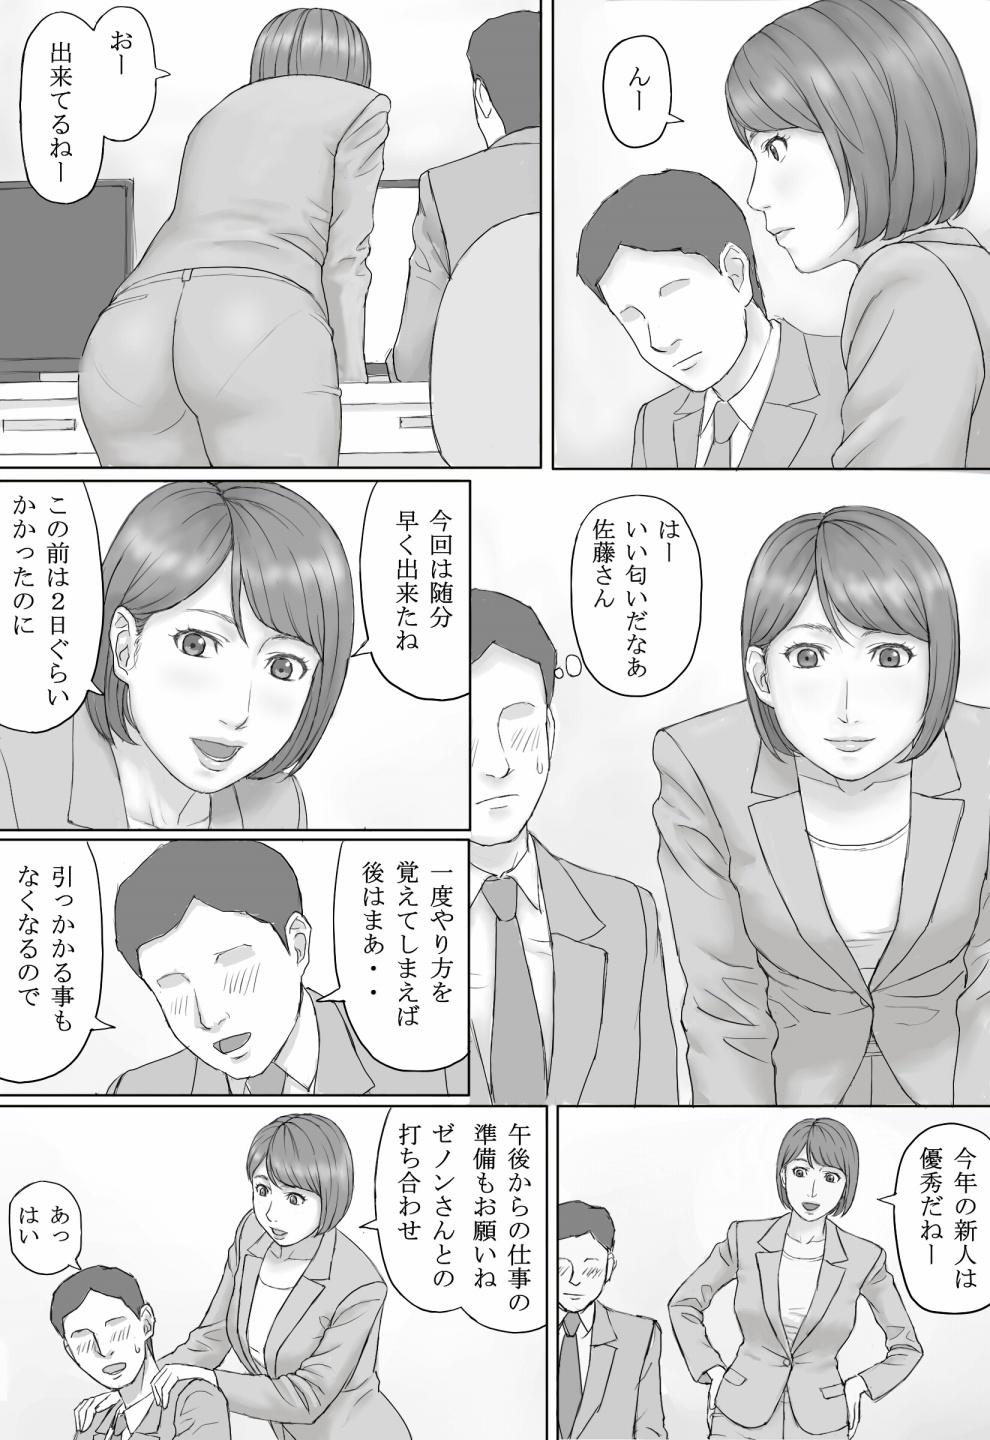 Inked Moshimo no sekai - Original Face Sitting - Page 6